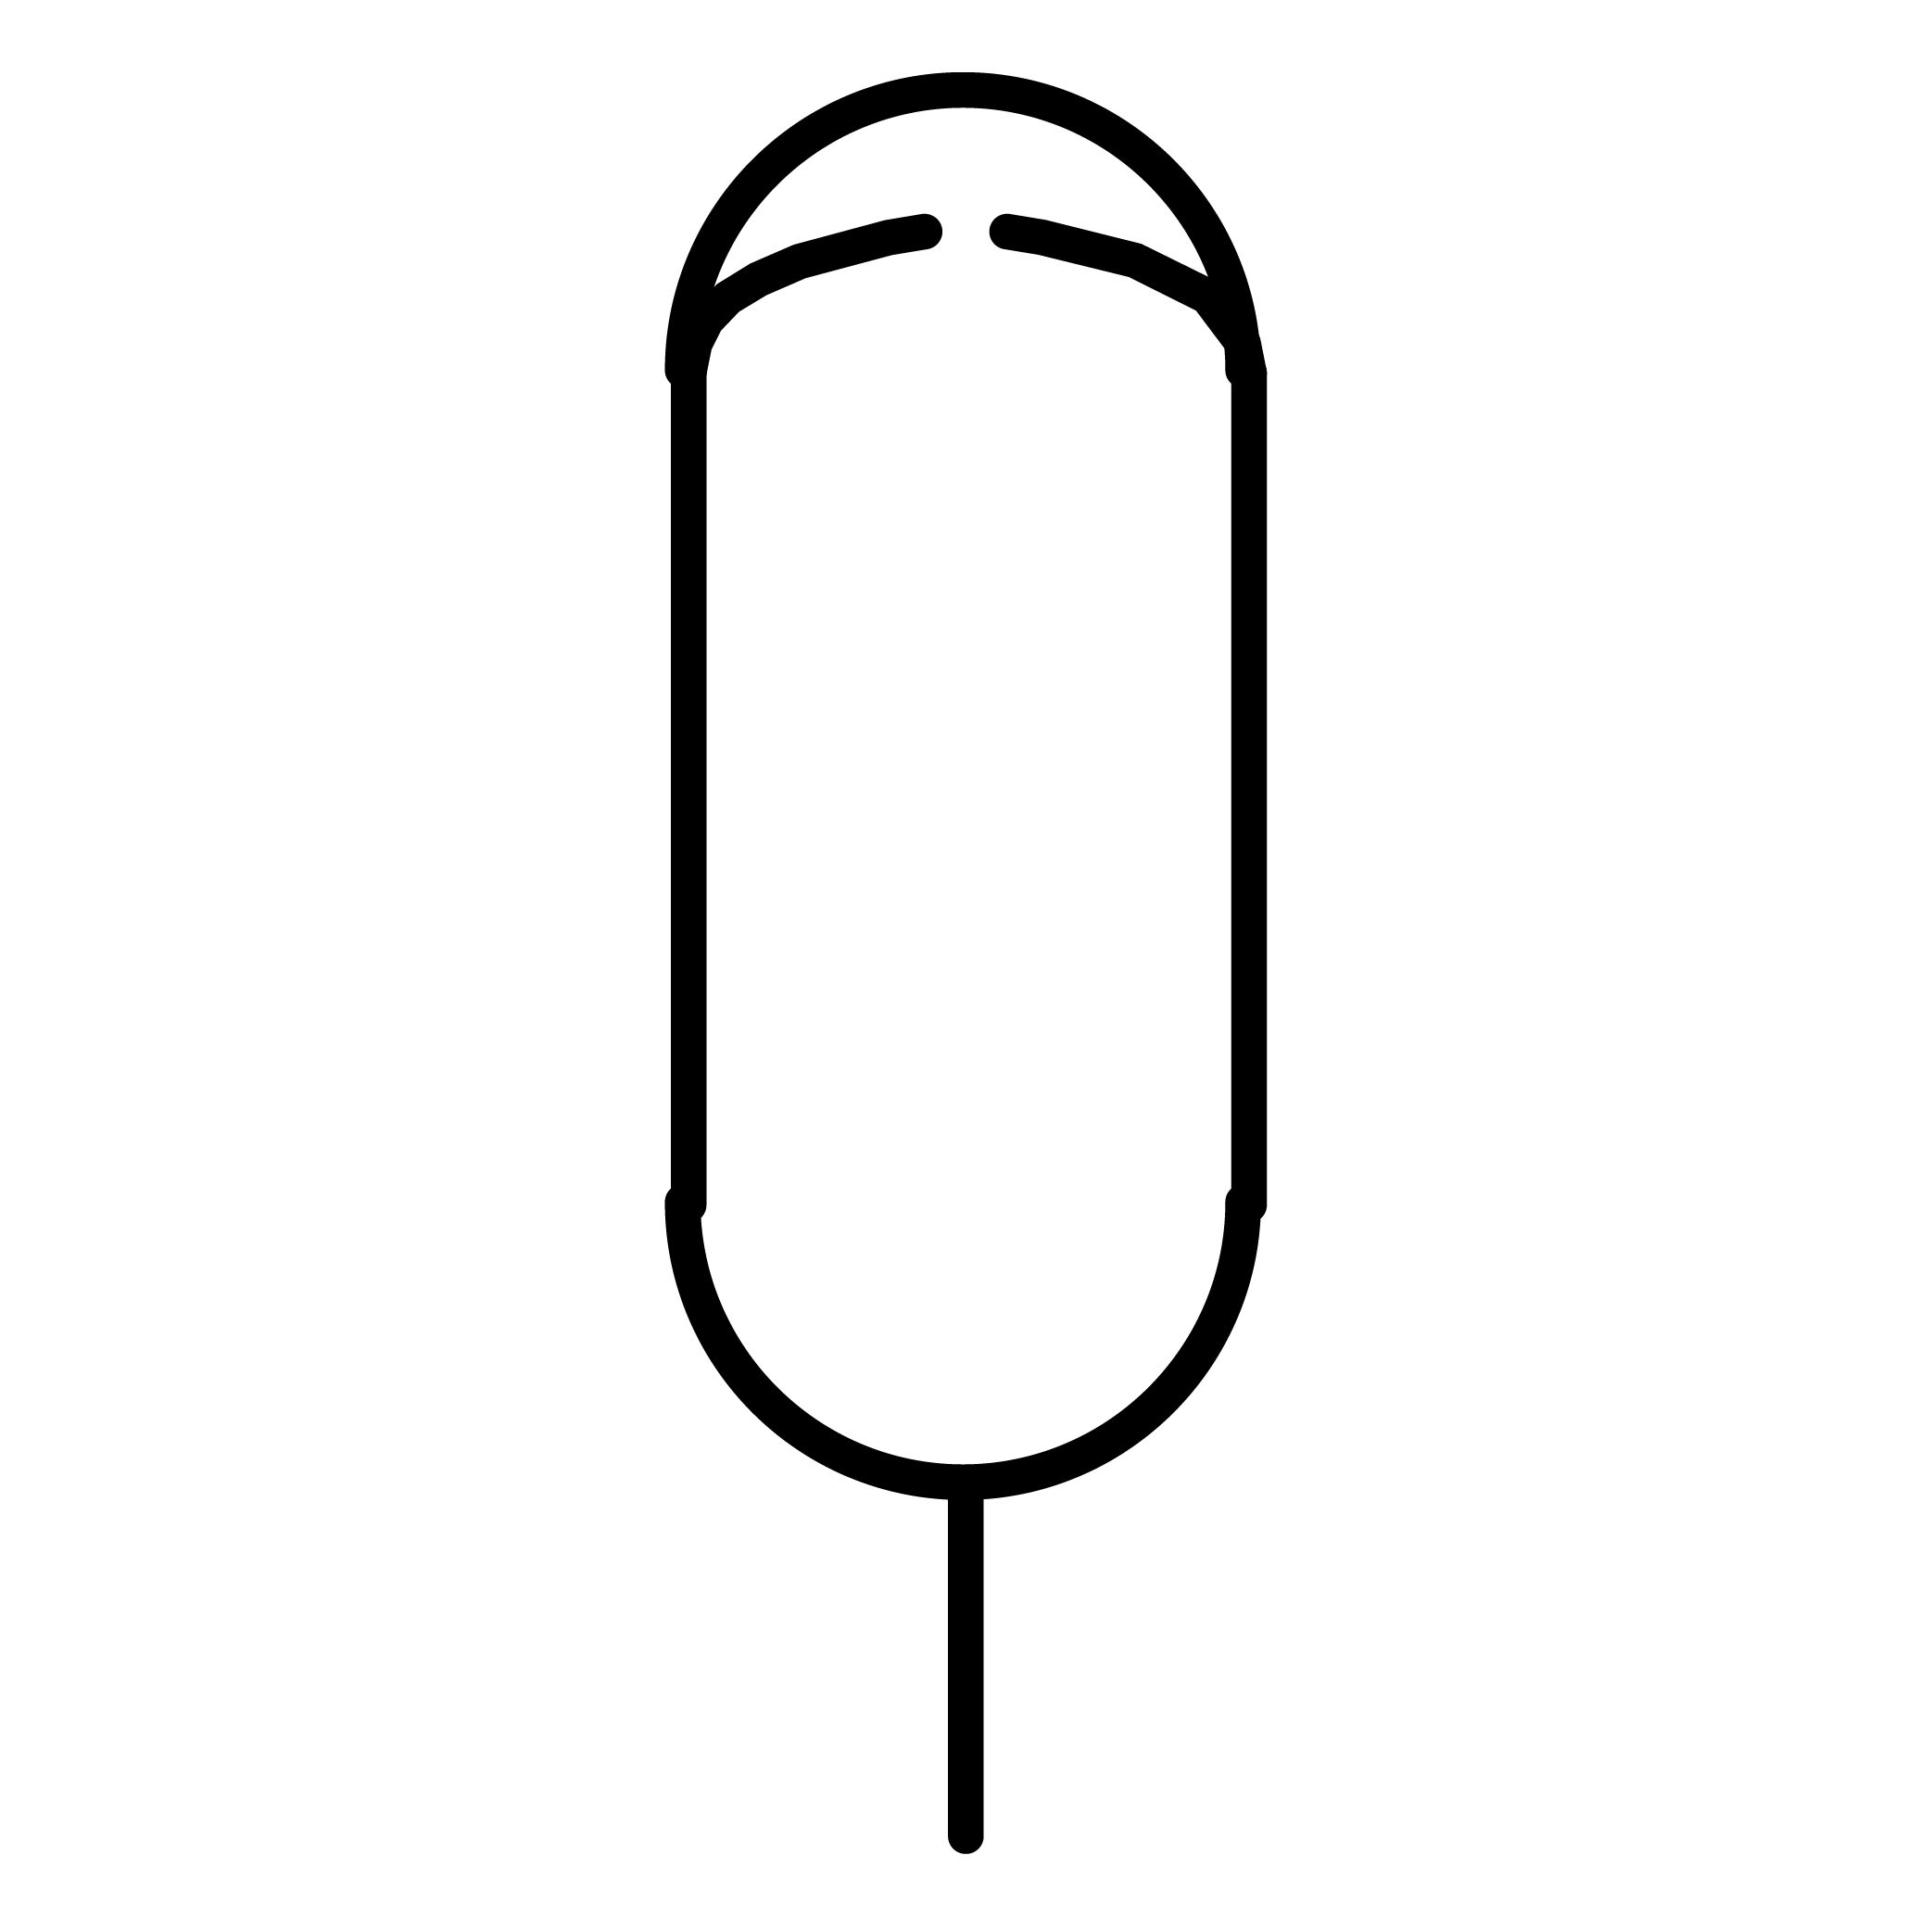 coriolis flow meter pandid symbol